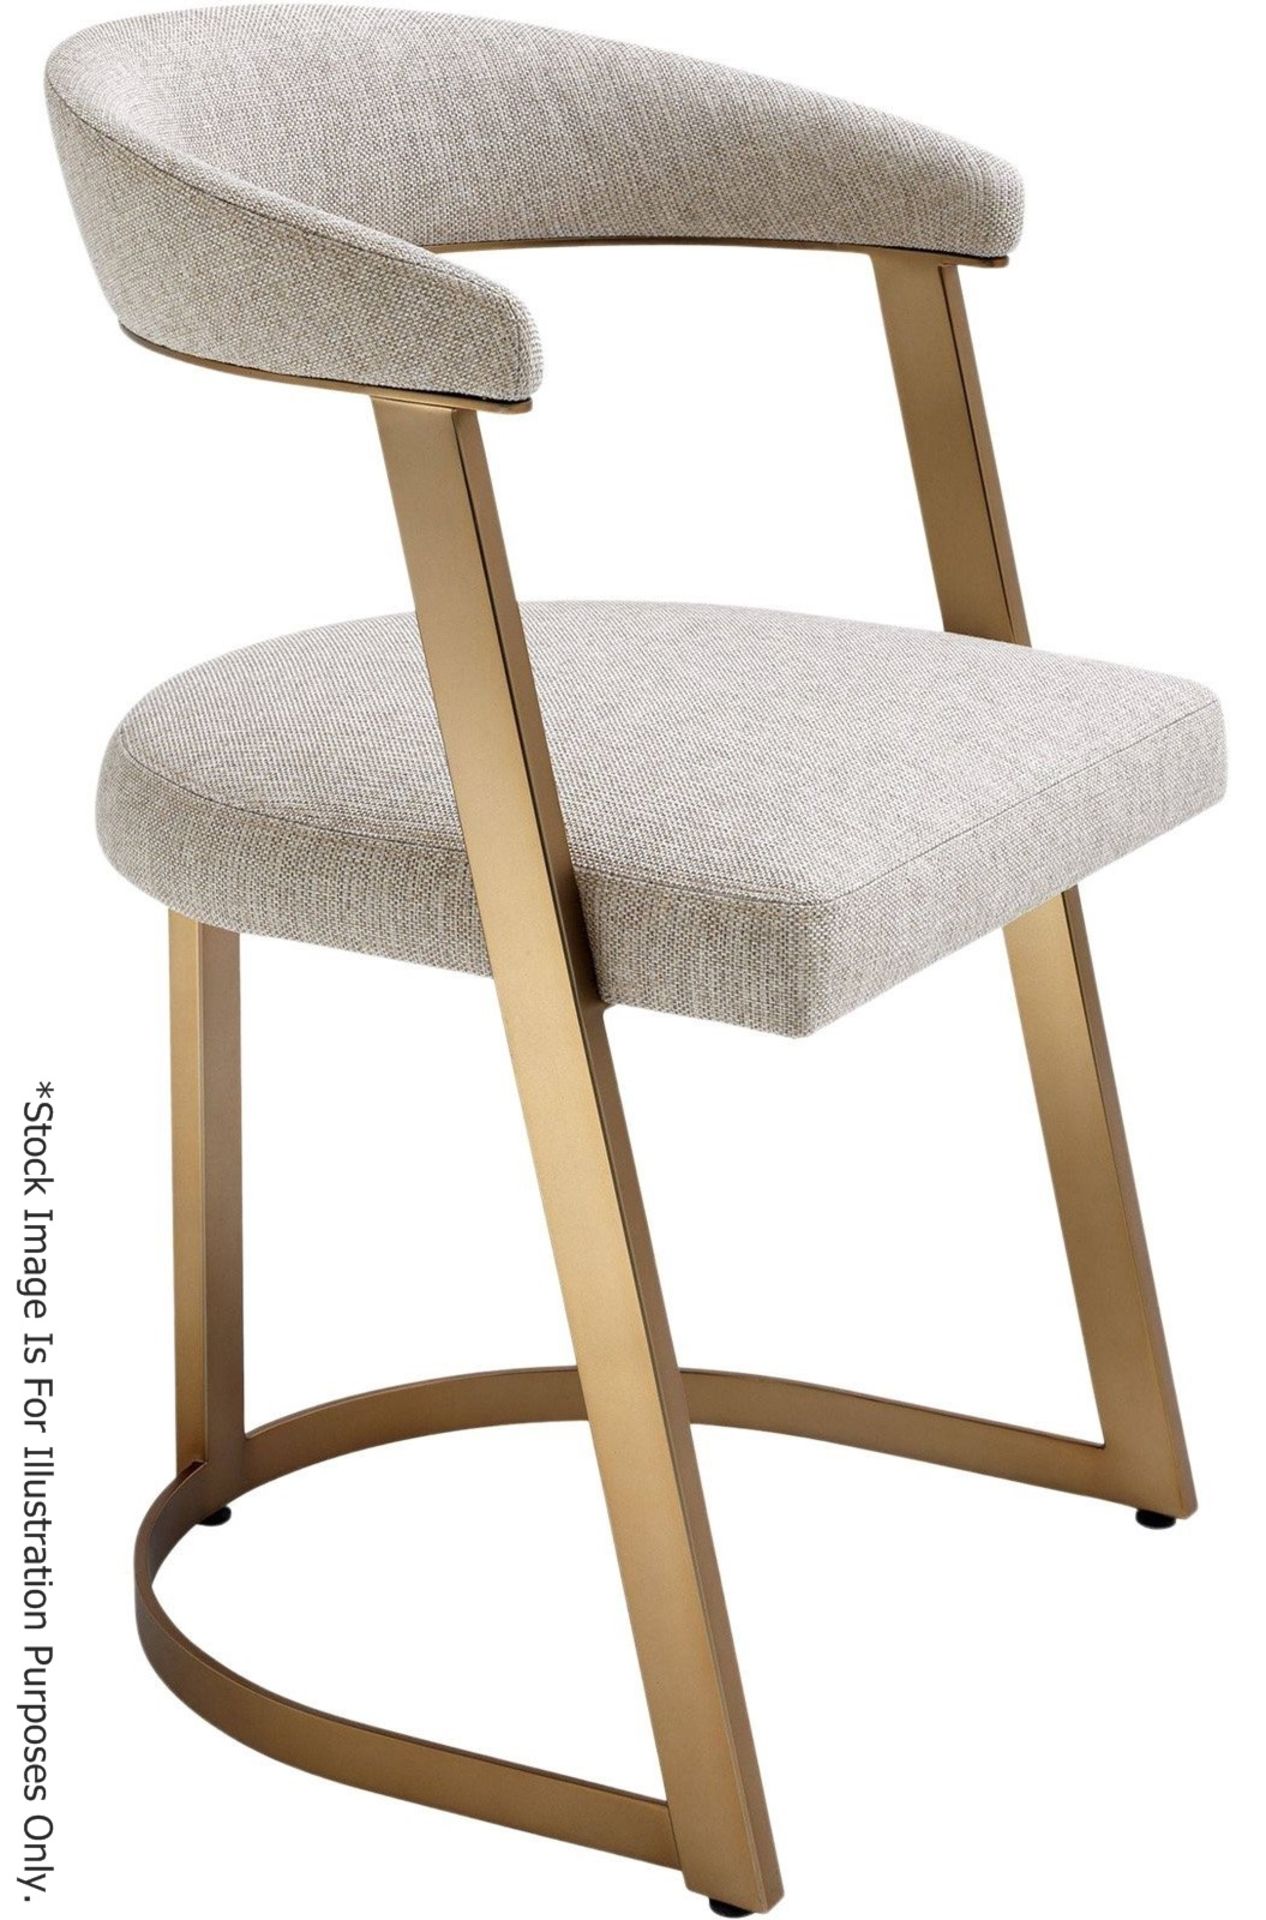 1 x EICHHOLTZ 'Dexter' Upholstered Brass Chair - In A Loki Natural Upholstery - Ref: 5836364/JUN21 -